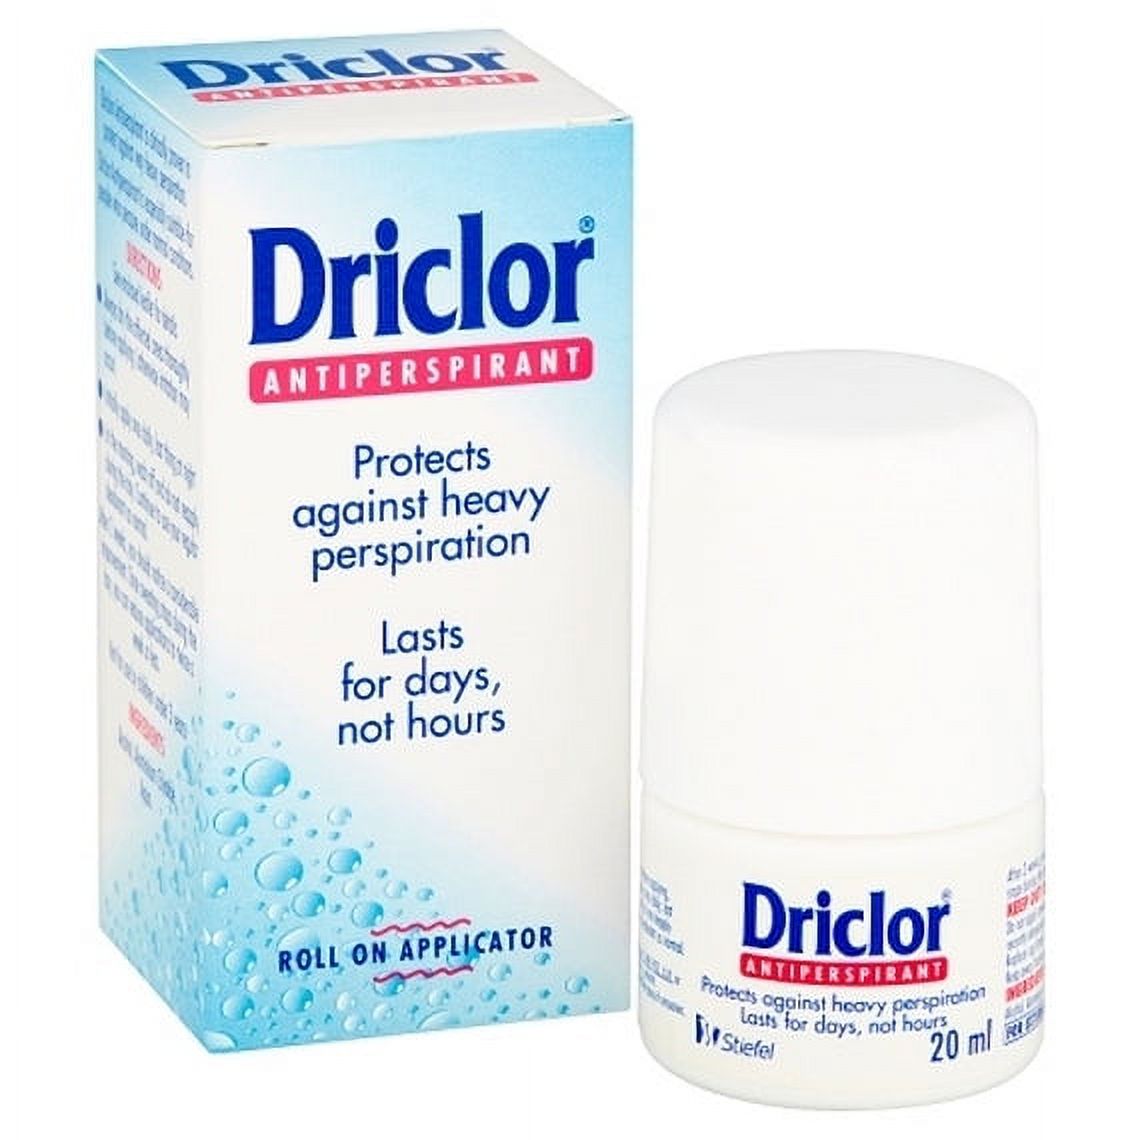 Driclor Antiperspirant Unisex Dry Roll-on Deodorant 20 ml. - image 5 of 6